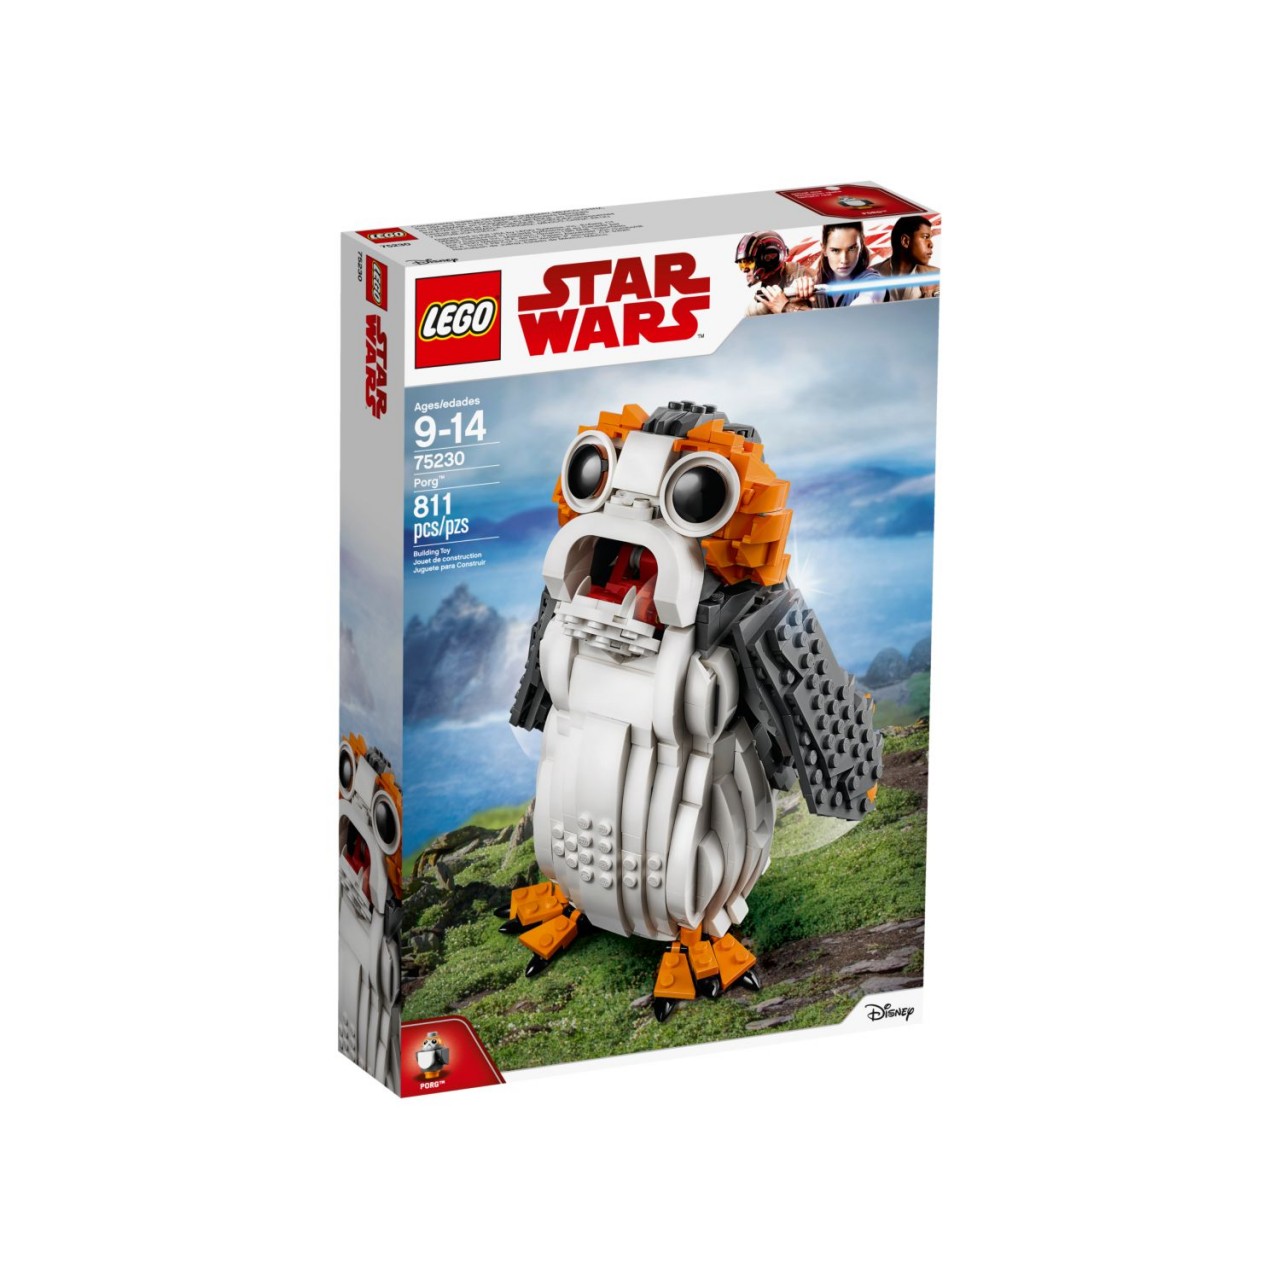 LEGO STAR WARS 75230 Porg